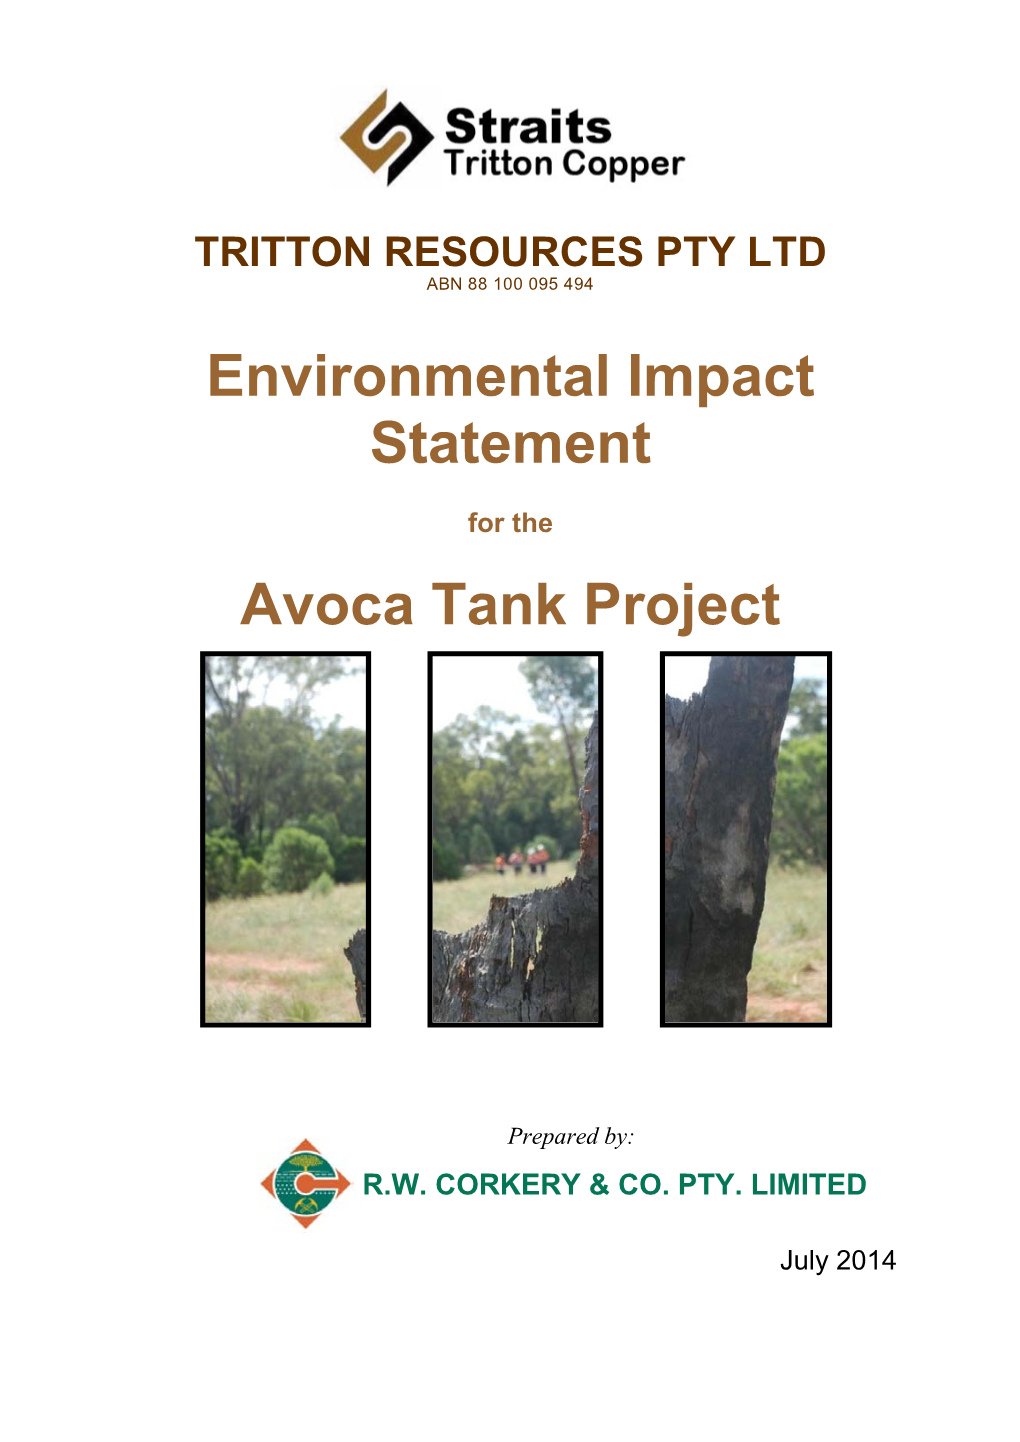 ENVIRONMENTAL IMPACT STATEMENT Avoca Tank Project Report No